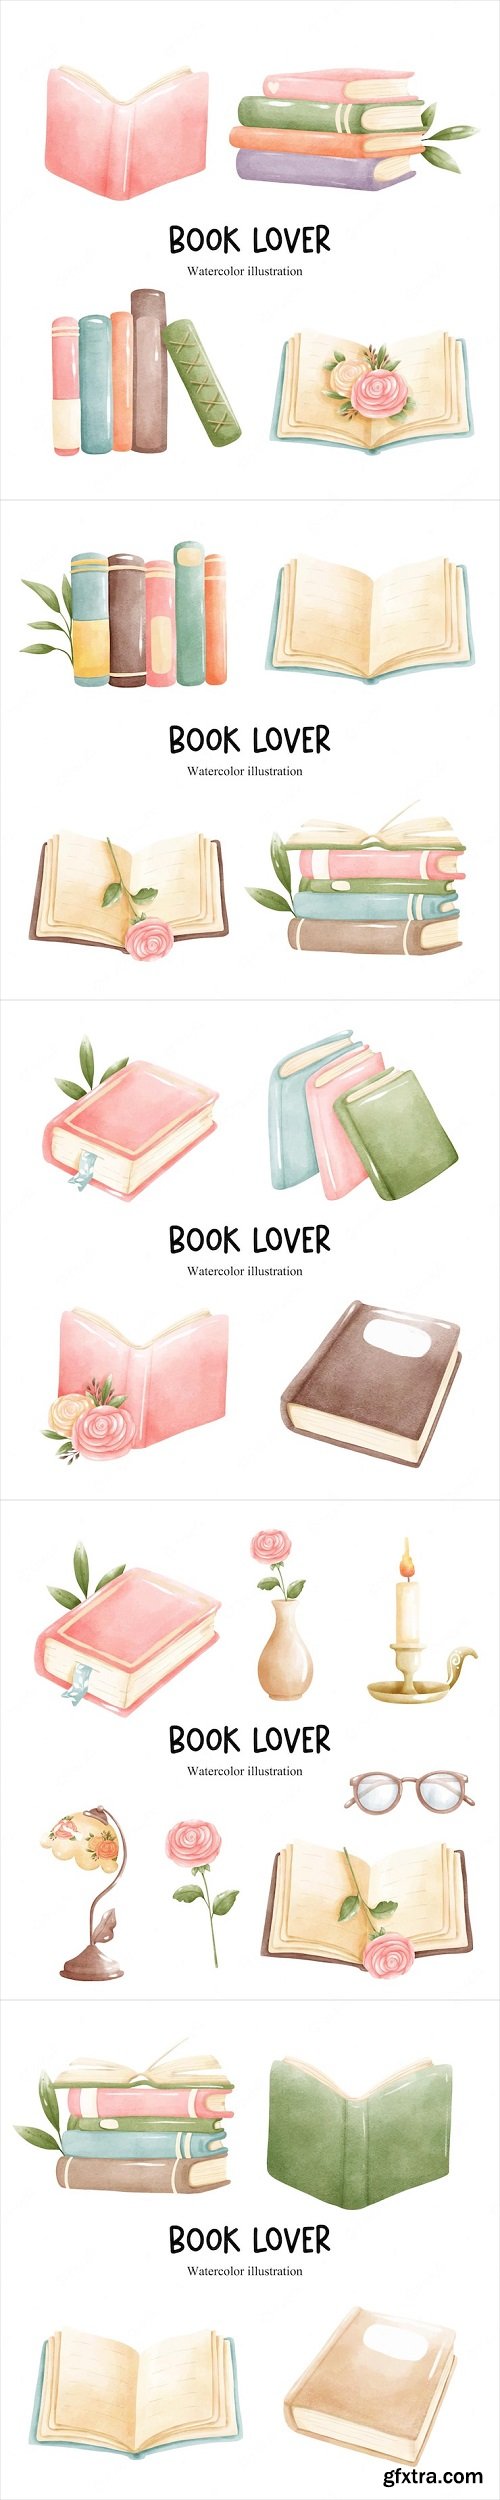 Book lover library vector illustration